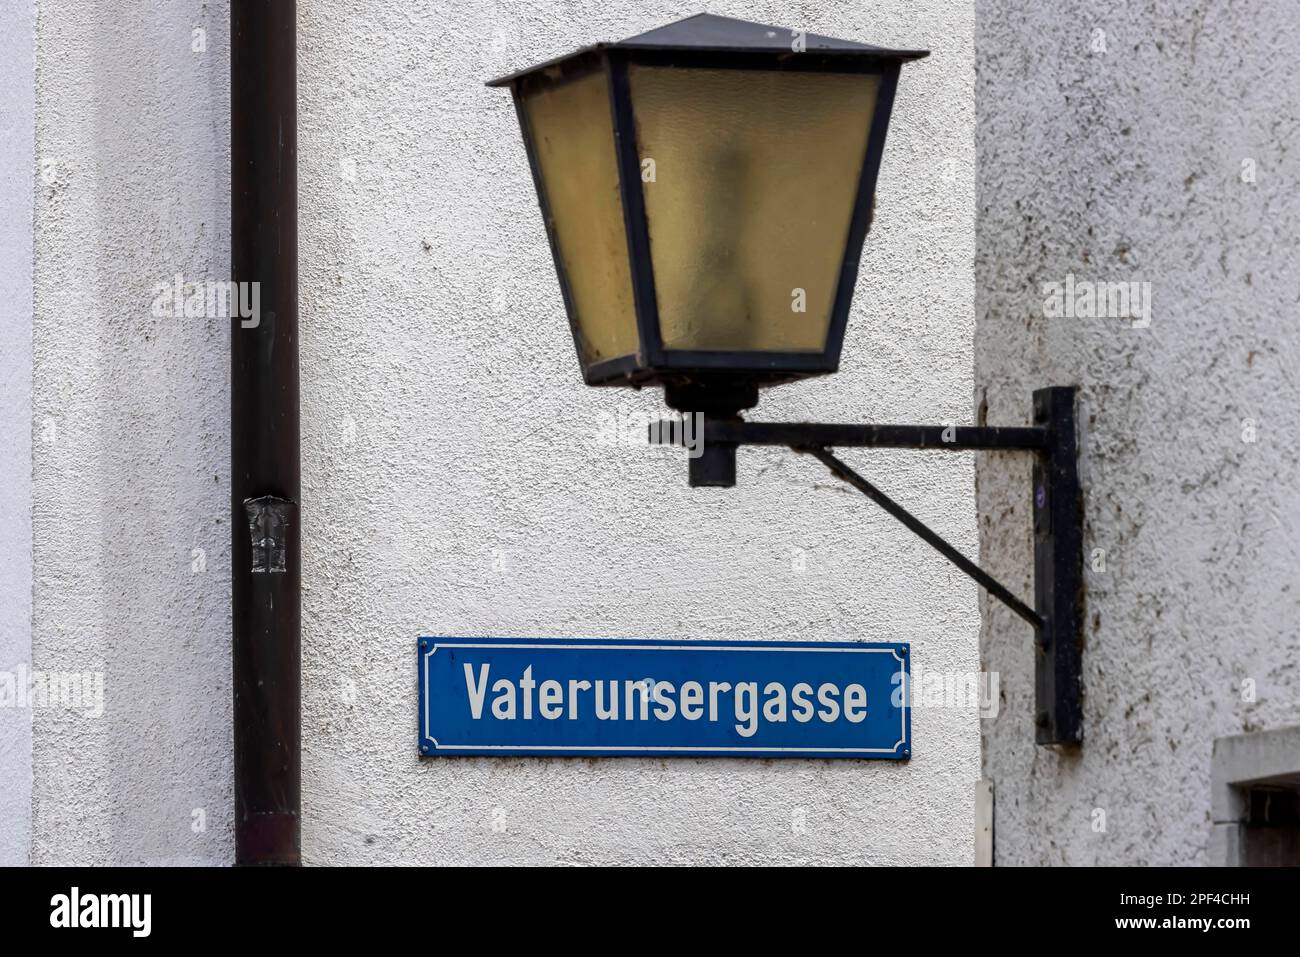 Vaterunsergasse in the Fischerviertel, strange alleyway names, alleyway sign, Ulm, Baden-Wuerttemberg, Germany Stock Photo